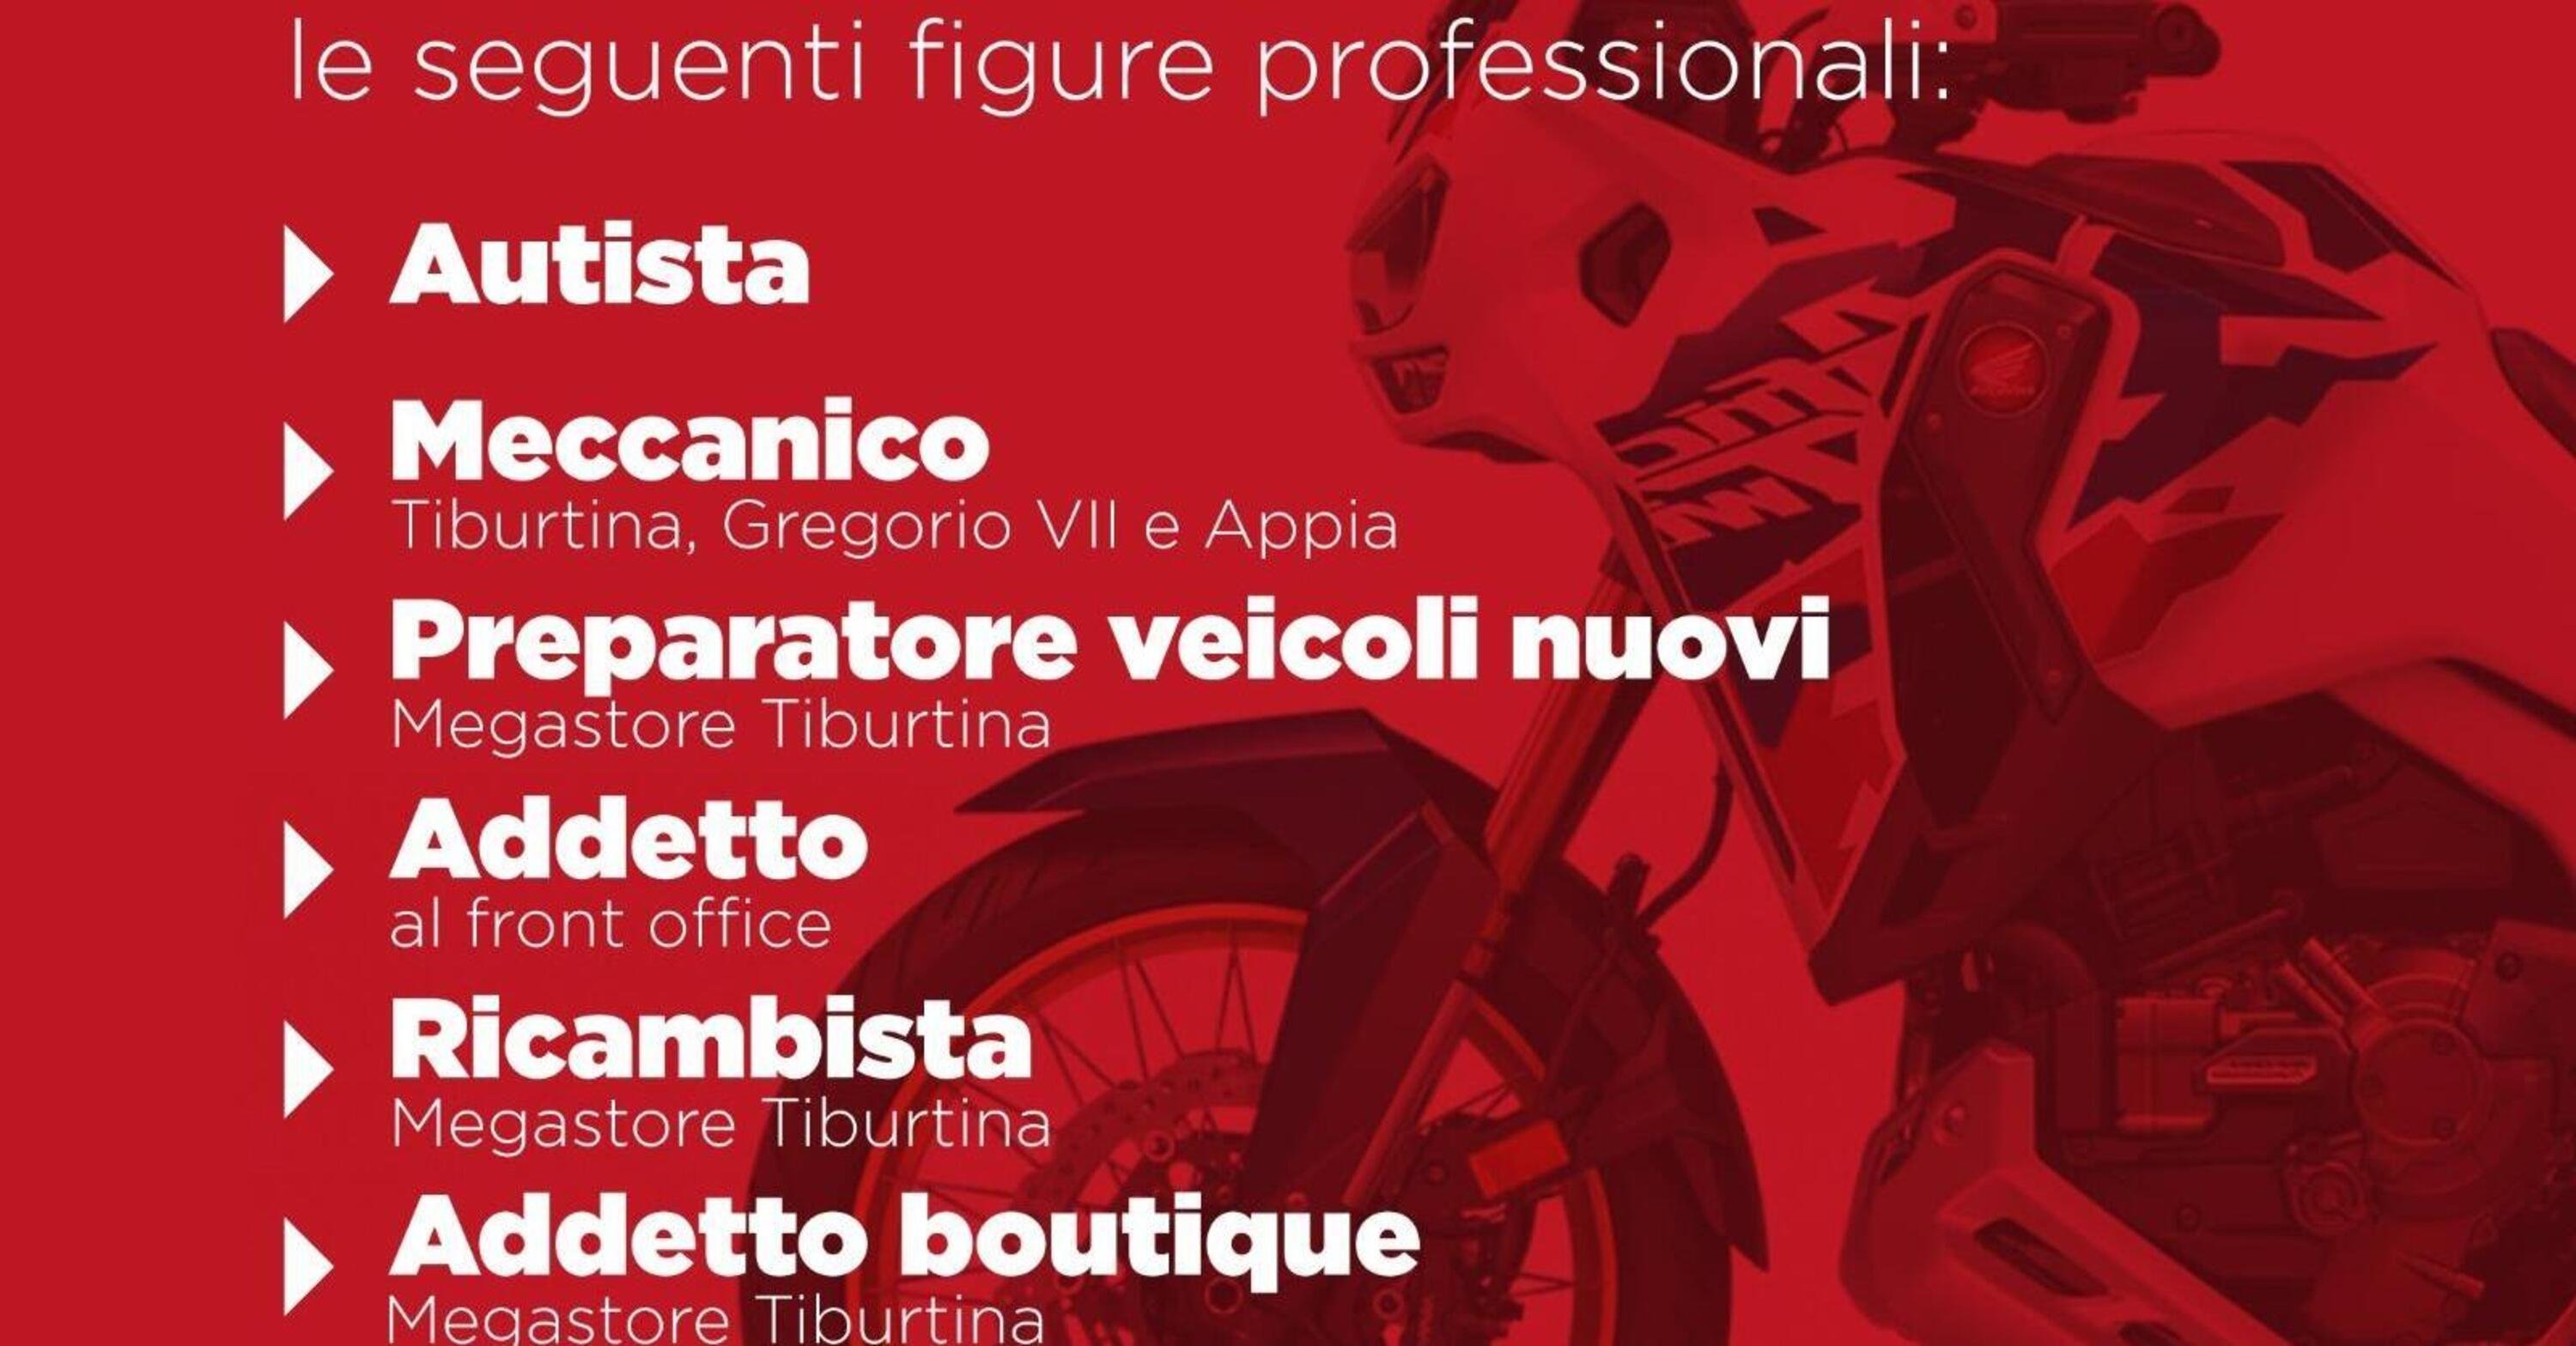 Honda Moto Roma ricerca personale